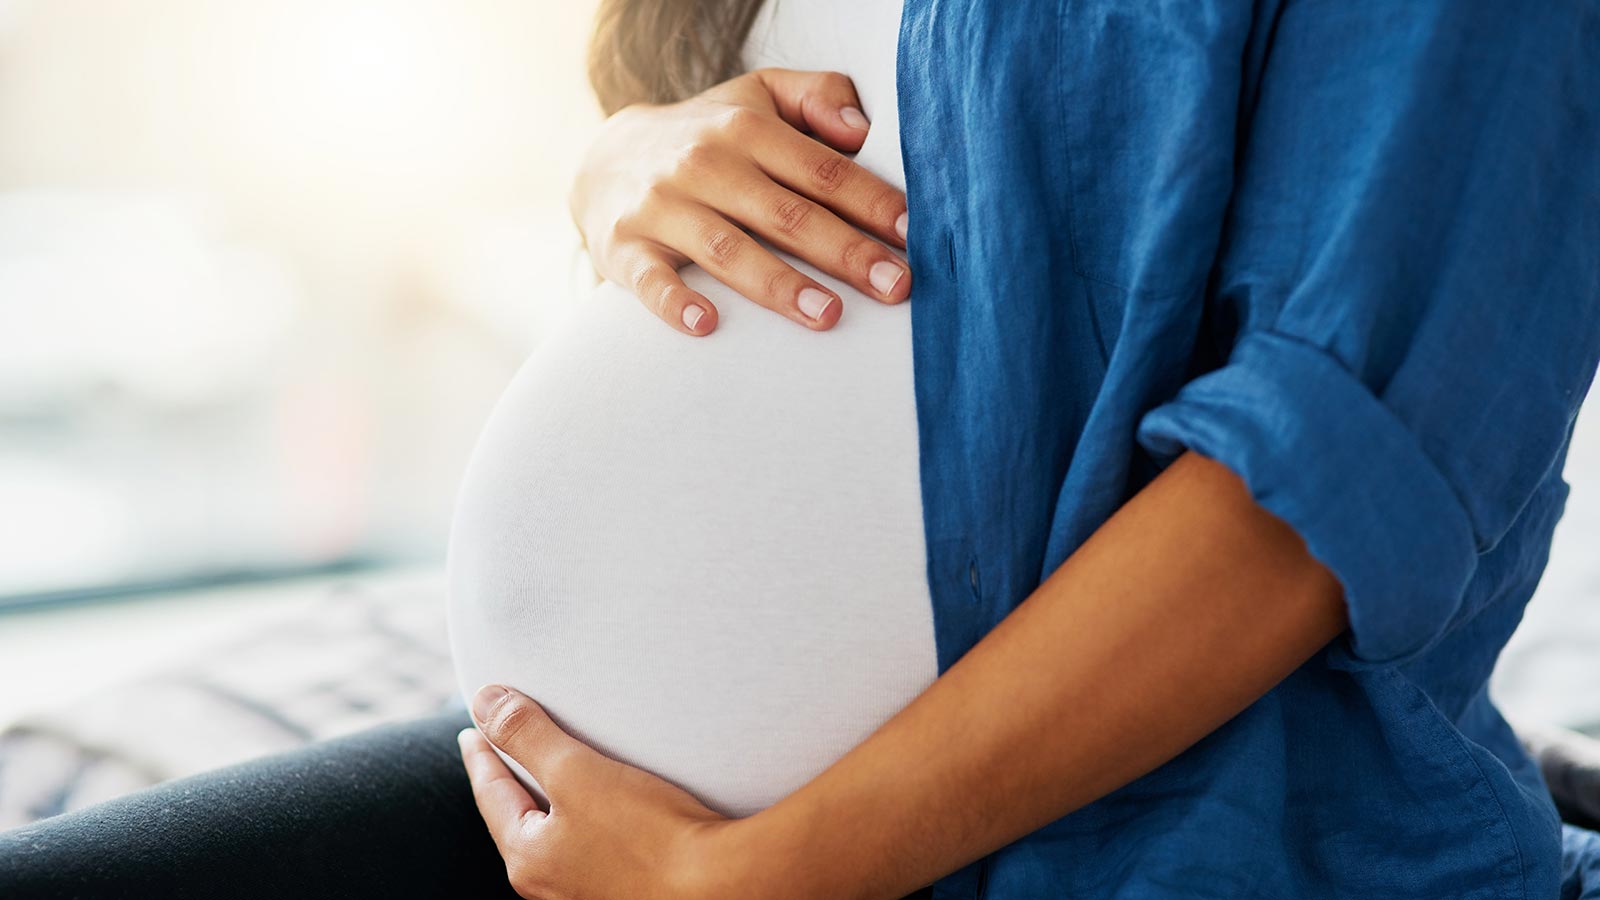 O esperma de doador pode ser utilizado para diferentes tipos de tratamento de fertilidade para engravidar